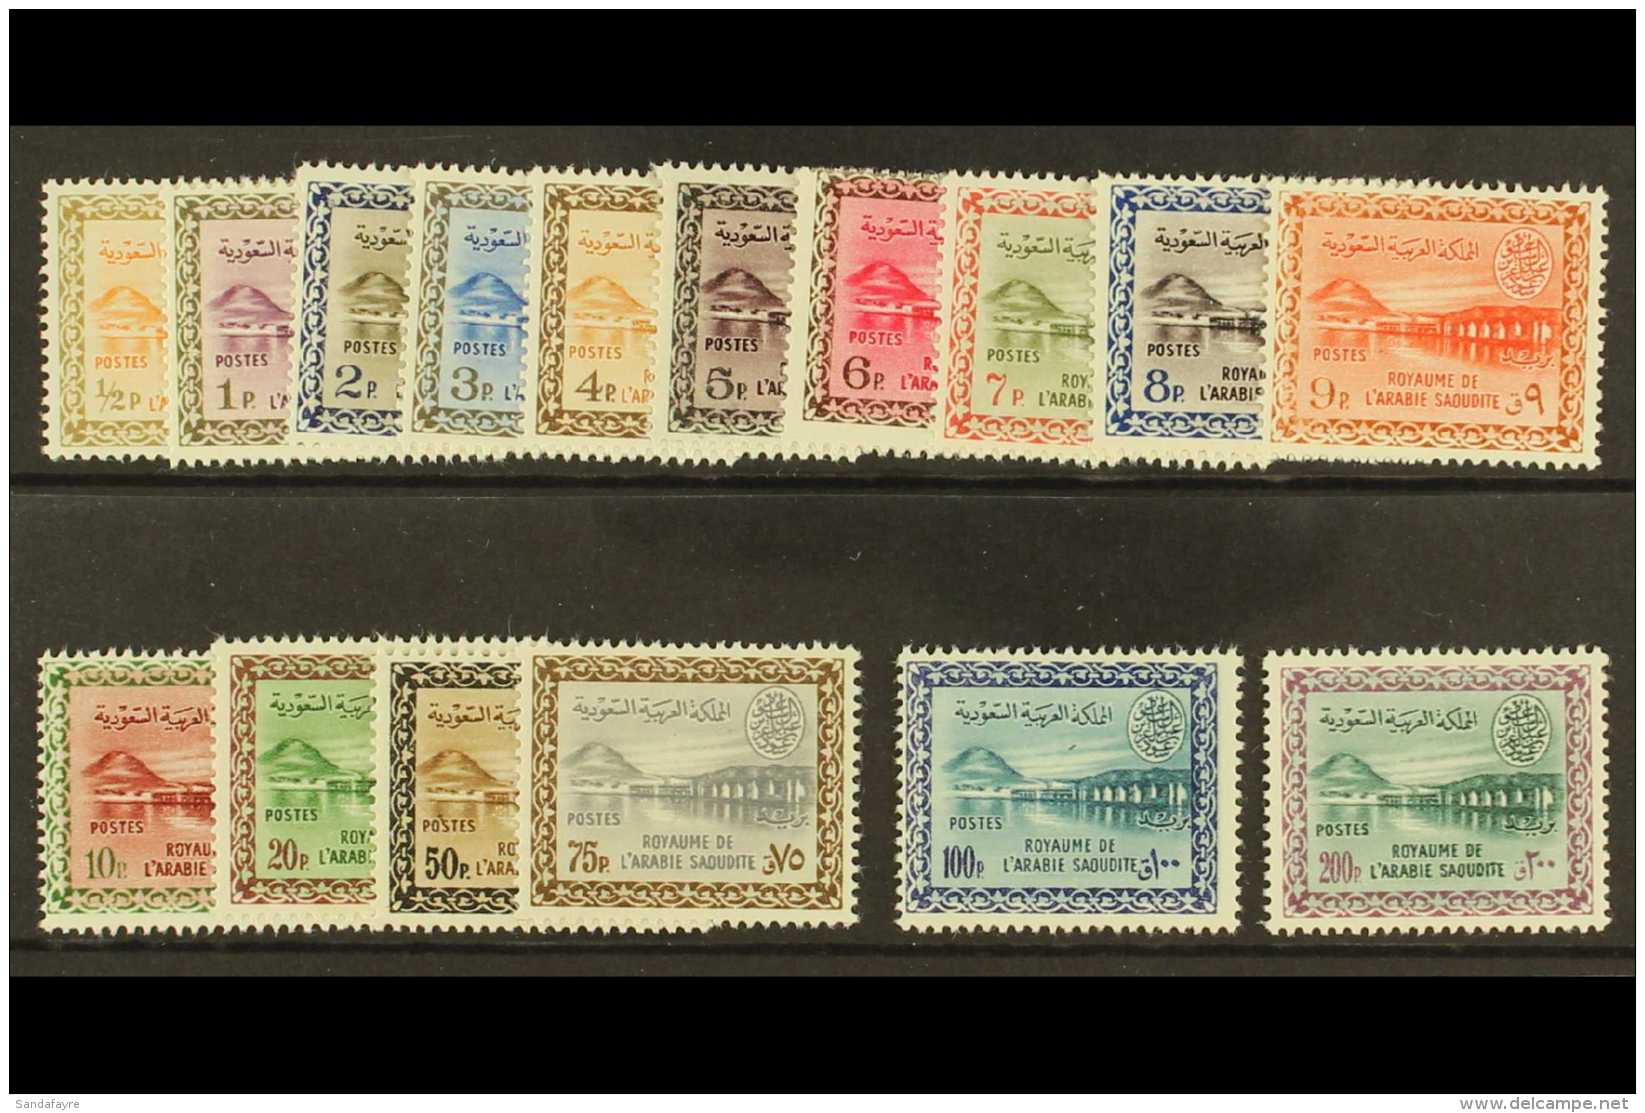 1960-61 Wadi Hanifa Dam Complete Definitive Set, SG 412/427, Never Hinged Mint. (16 Stamps) For More Images,... - Saoedi-Arabië